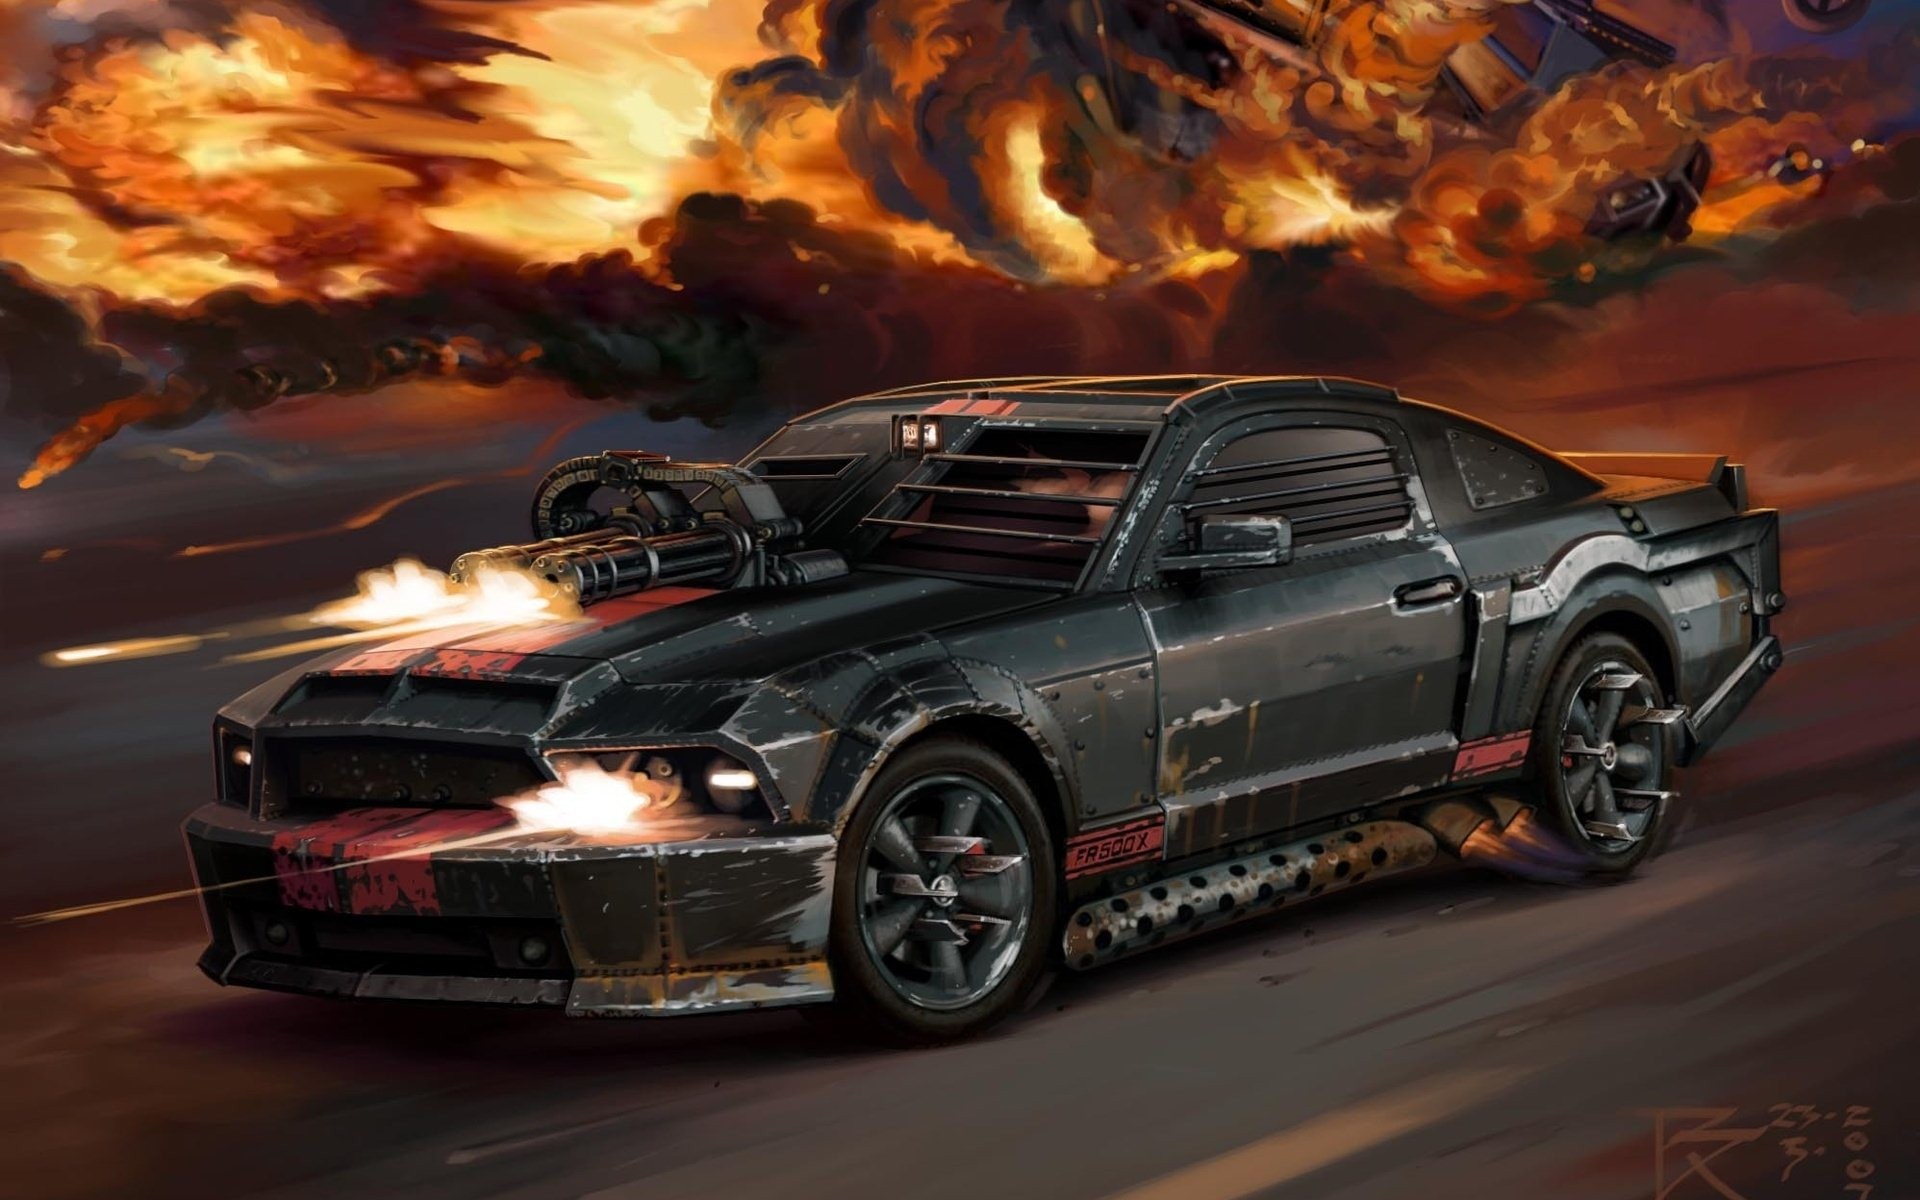 Black Guns Cars Explosions Digital Art Artwork Death Race